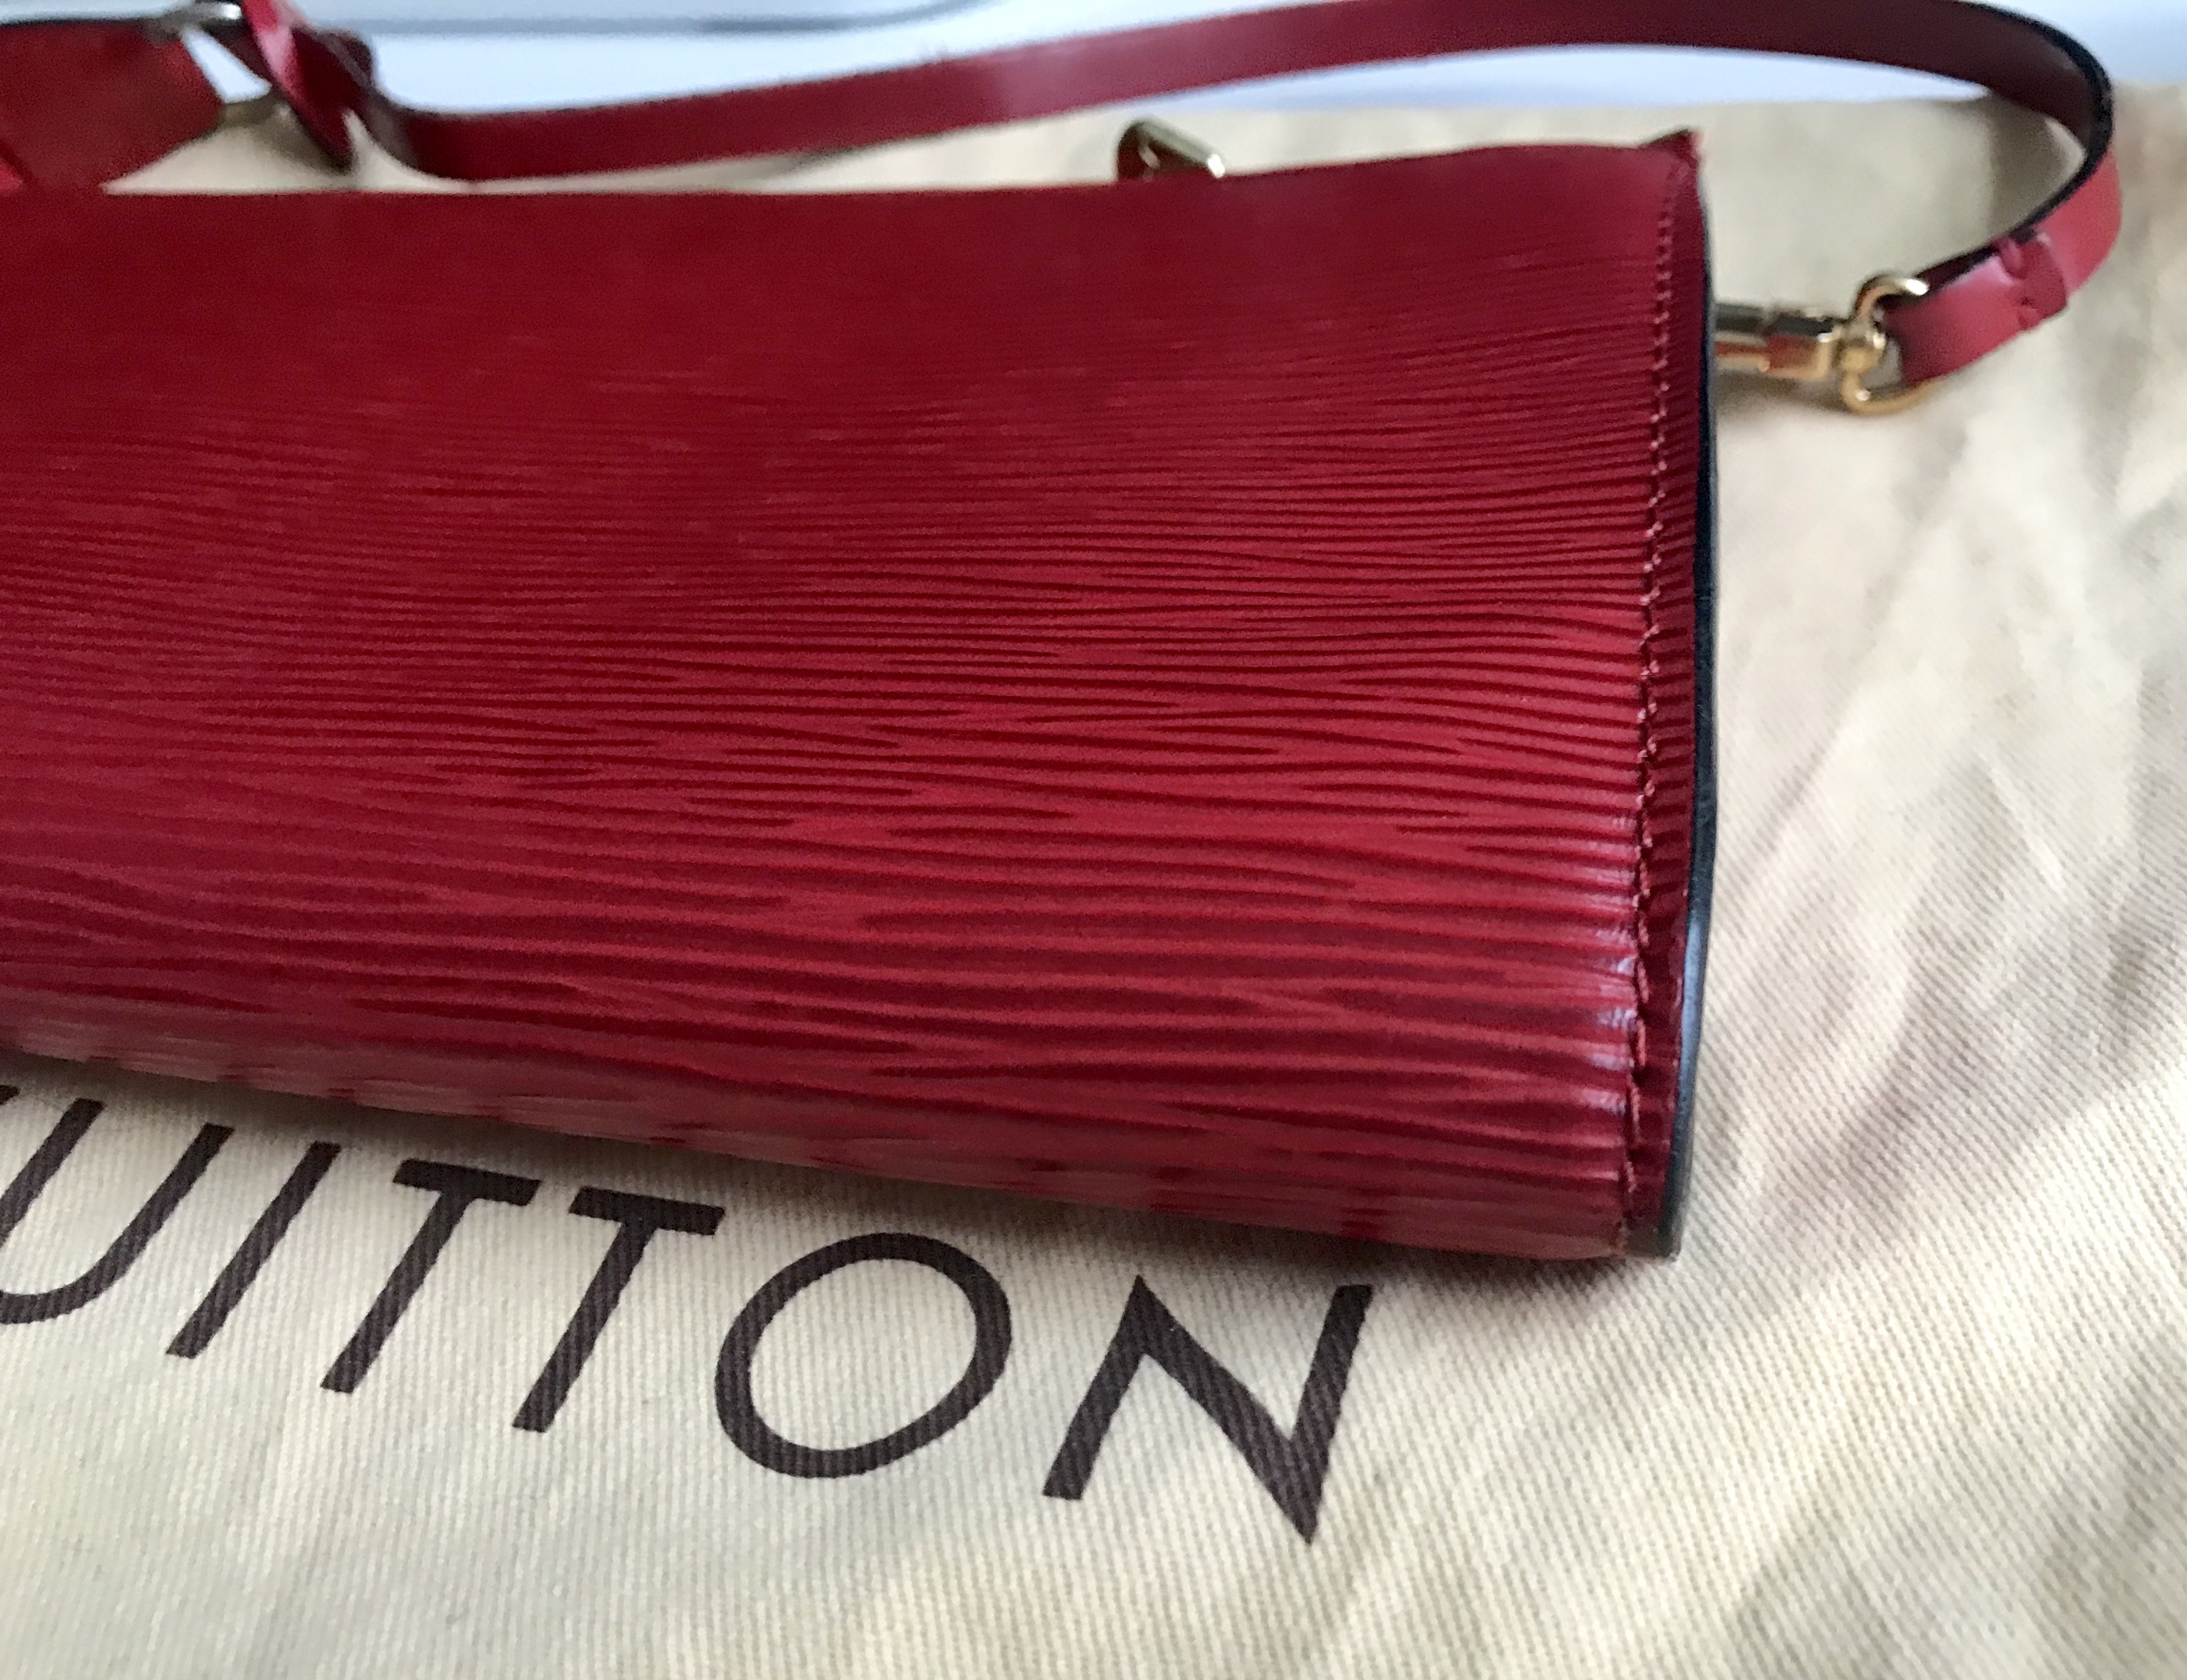 Pre-loved] Louis Vuitton SM Kirigami Epi Leather Pochette - Red